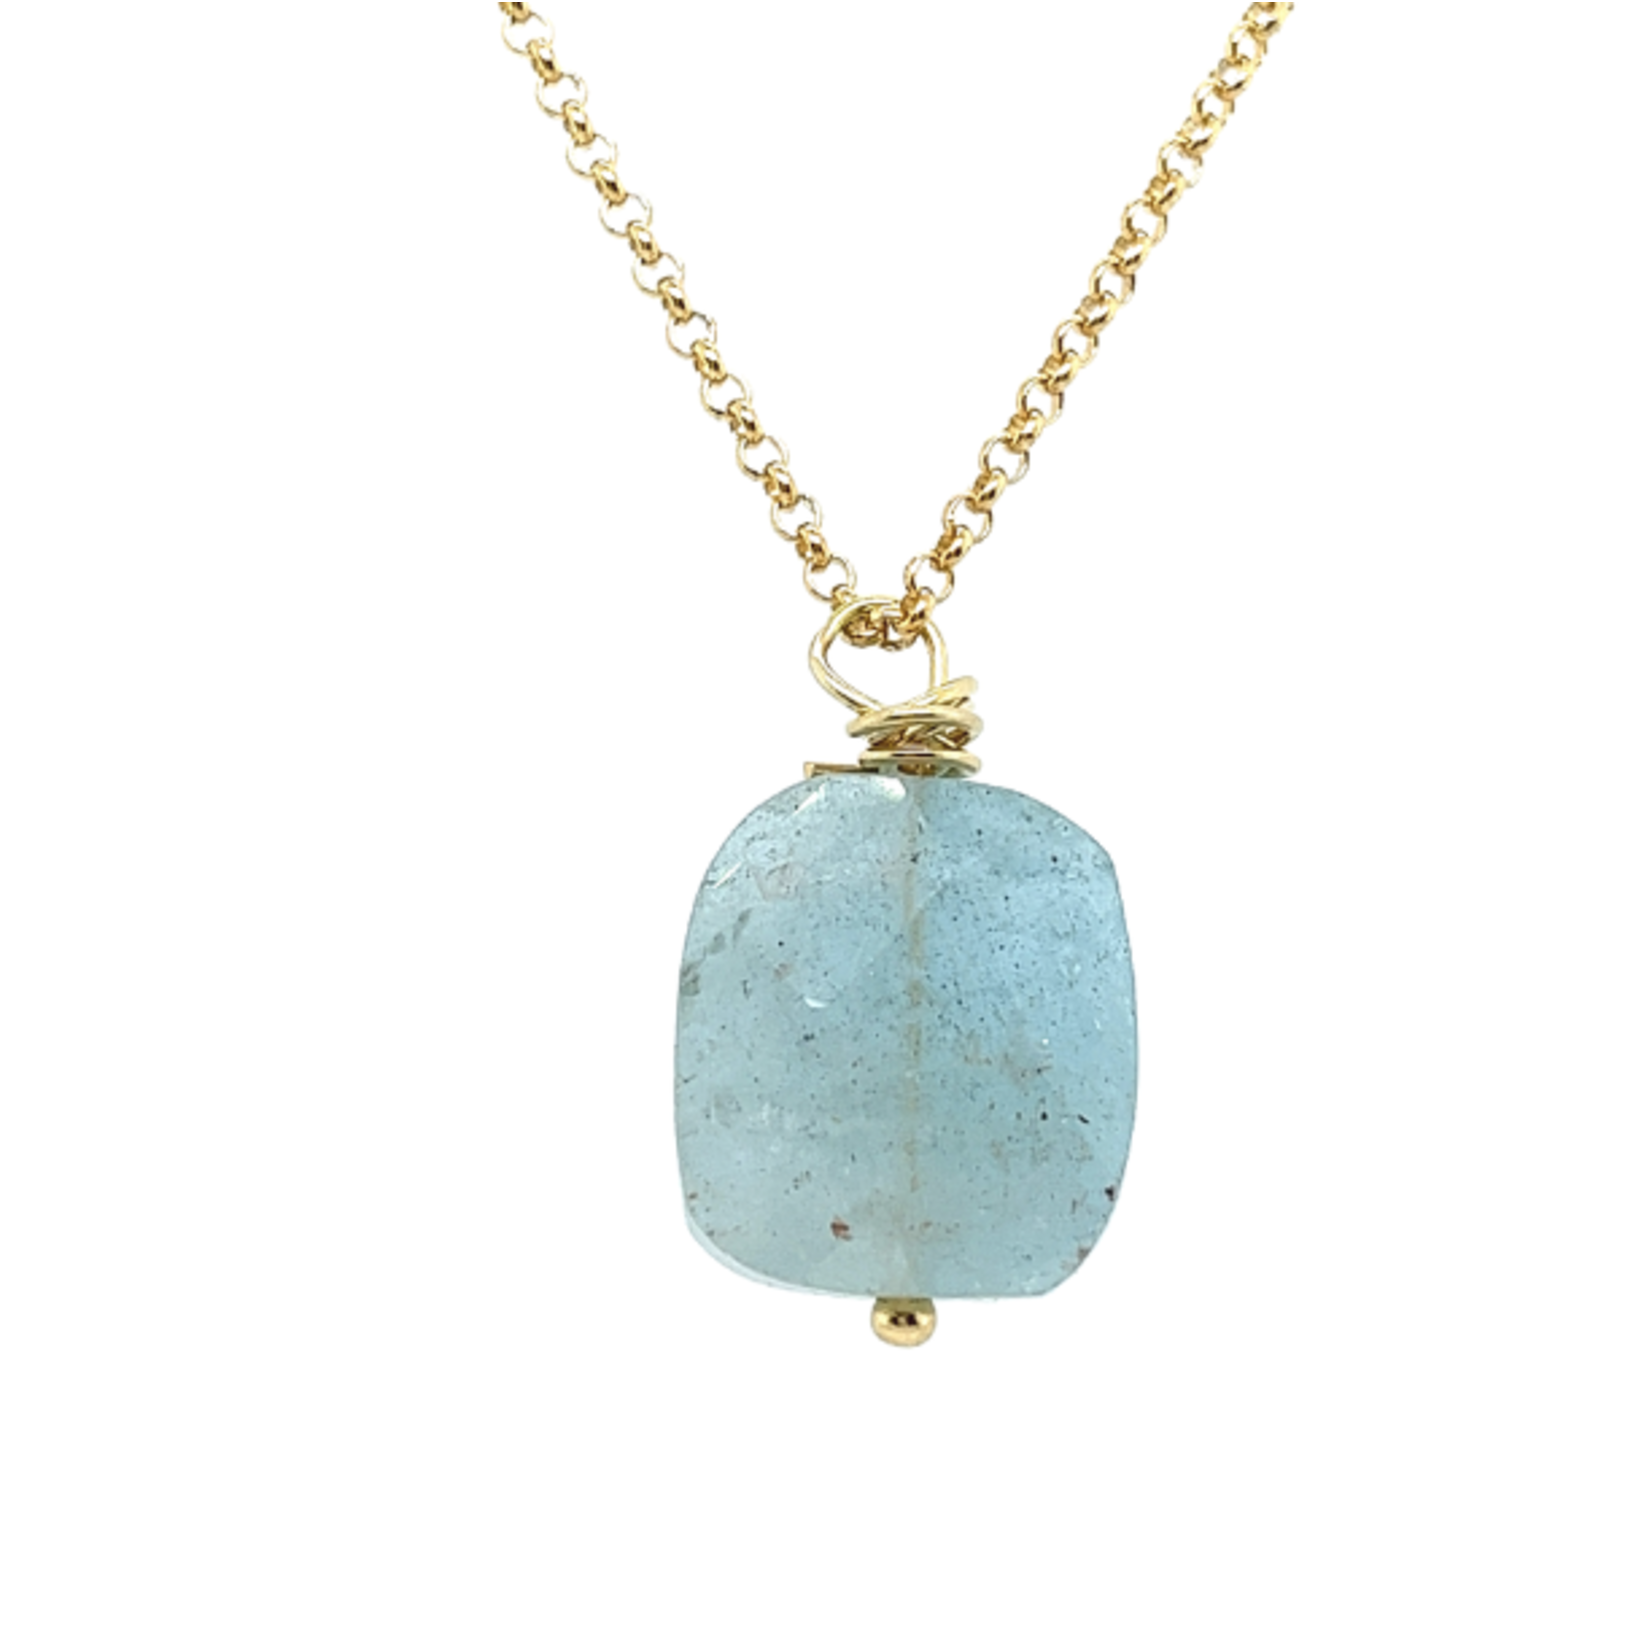 Aquamarine pendant with necklace gold